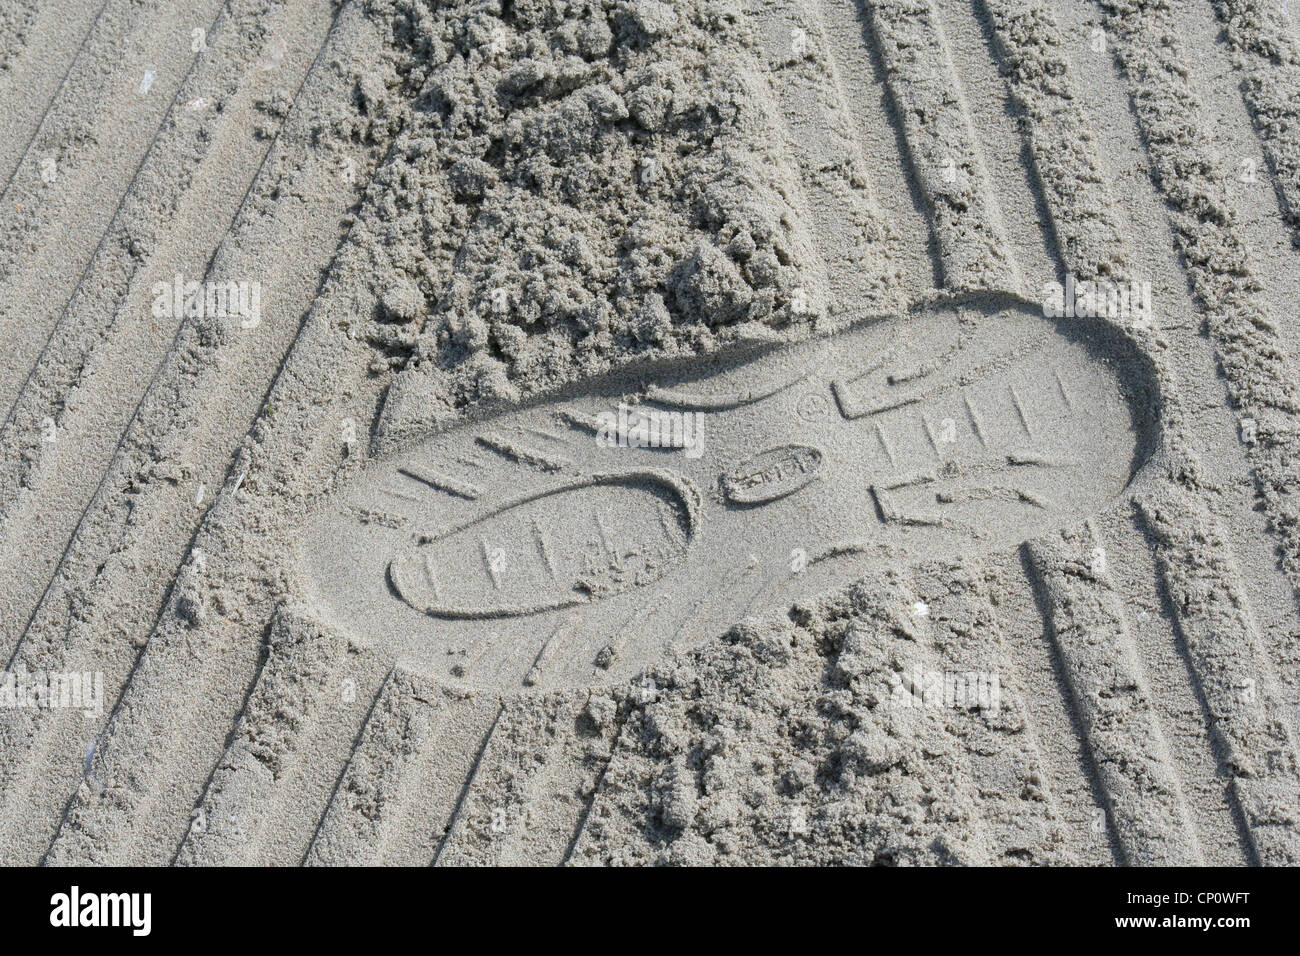 Footprint on beach Stock Photo